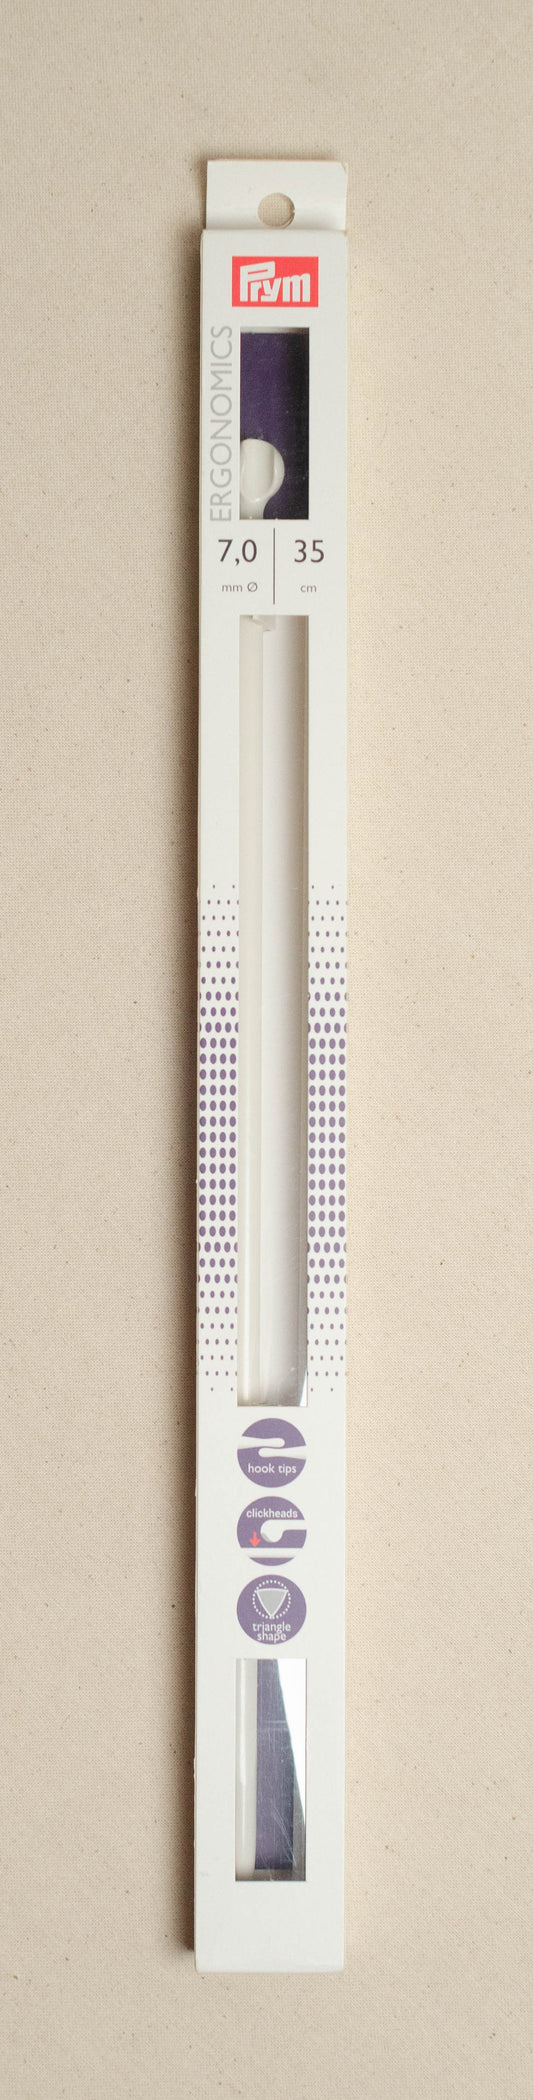 Prym Ergonomics 35cm Knitting Needles - 35cm X 7.0mm